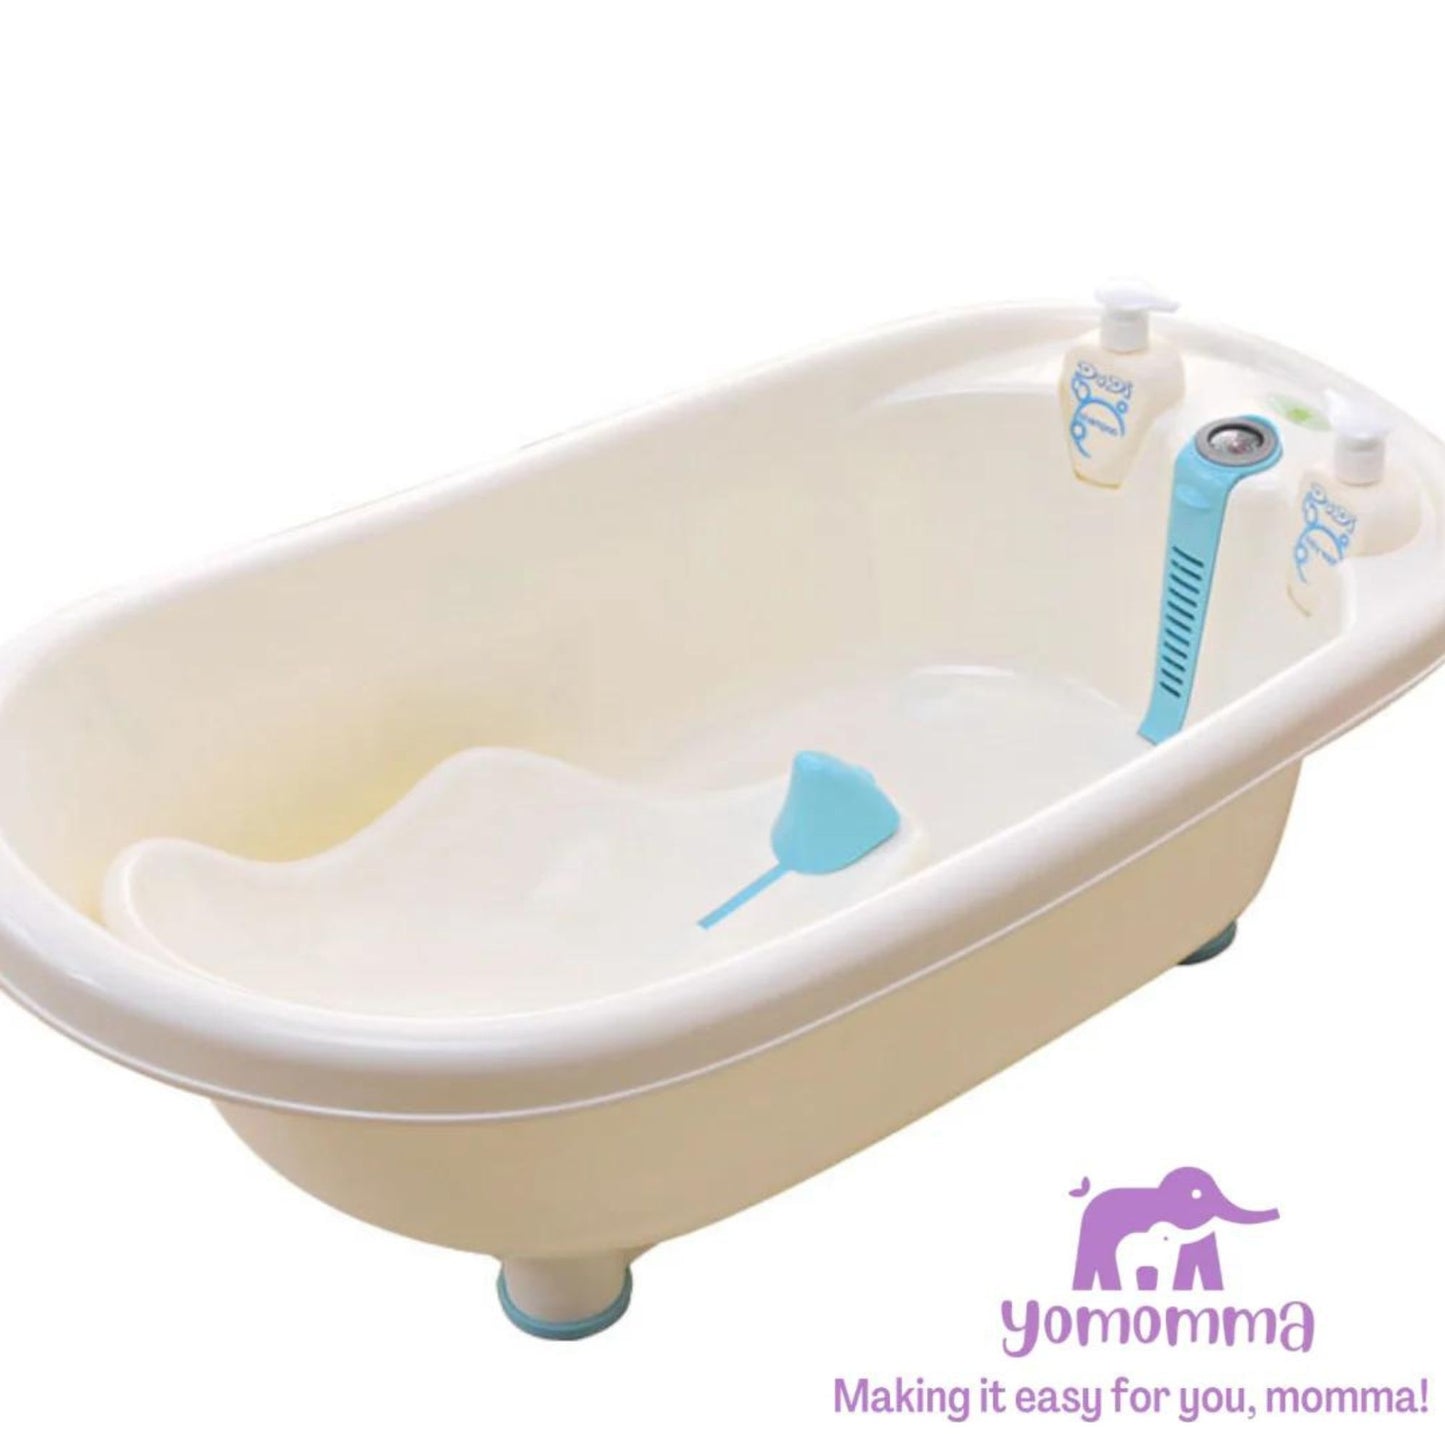 Yomomma Baby Bath Tub with Stand (Newborn-8 Years Old)